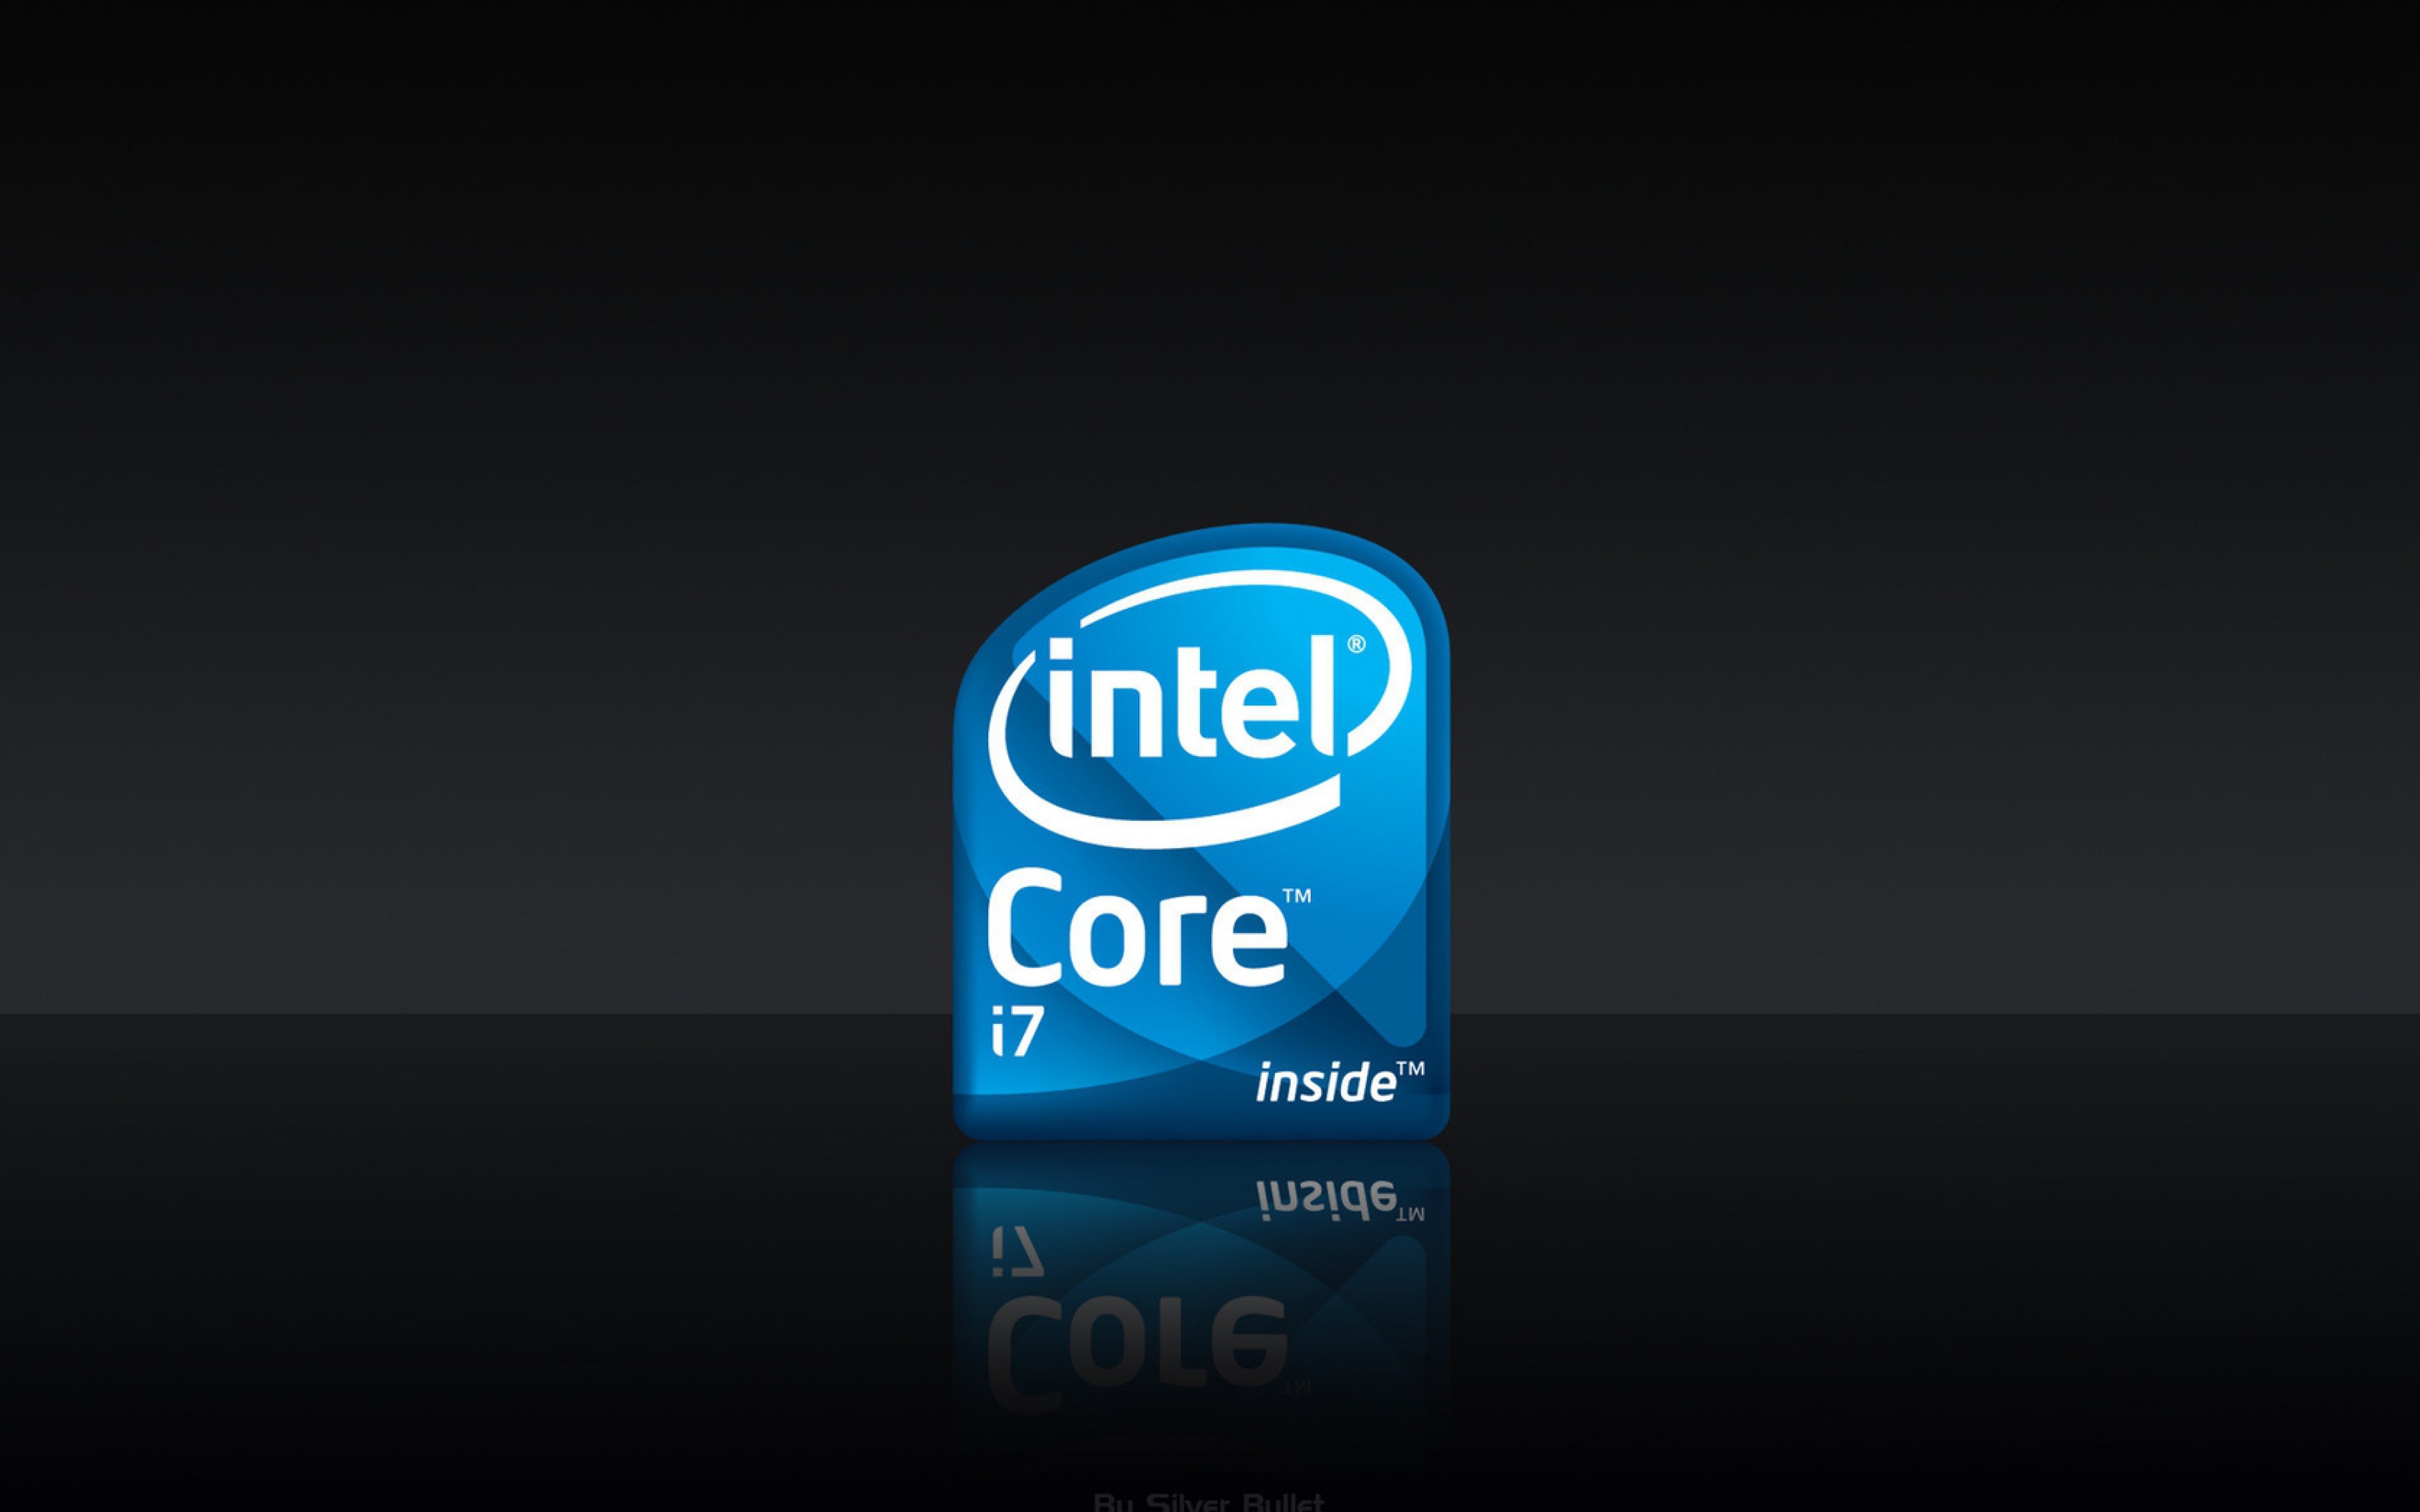 Wallpaper Intel I7 Core Processor Inside Tm Ultra HD 4k